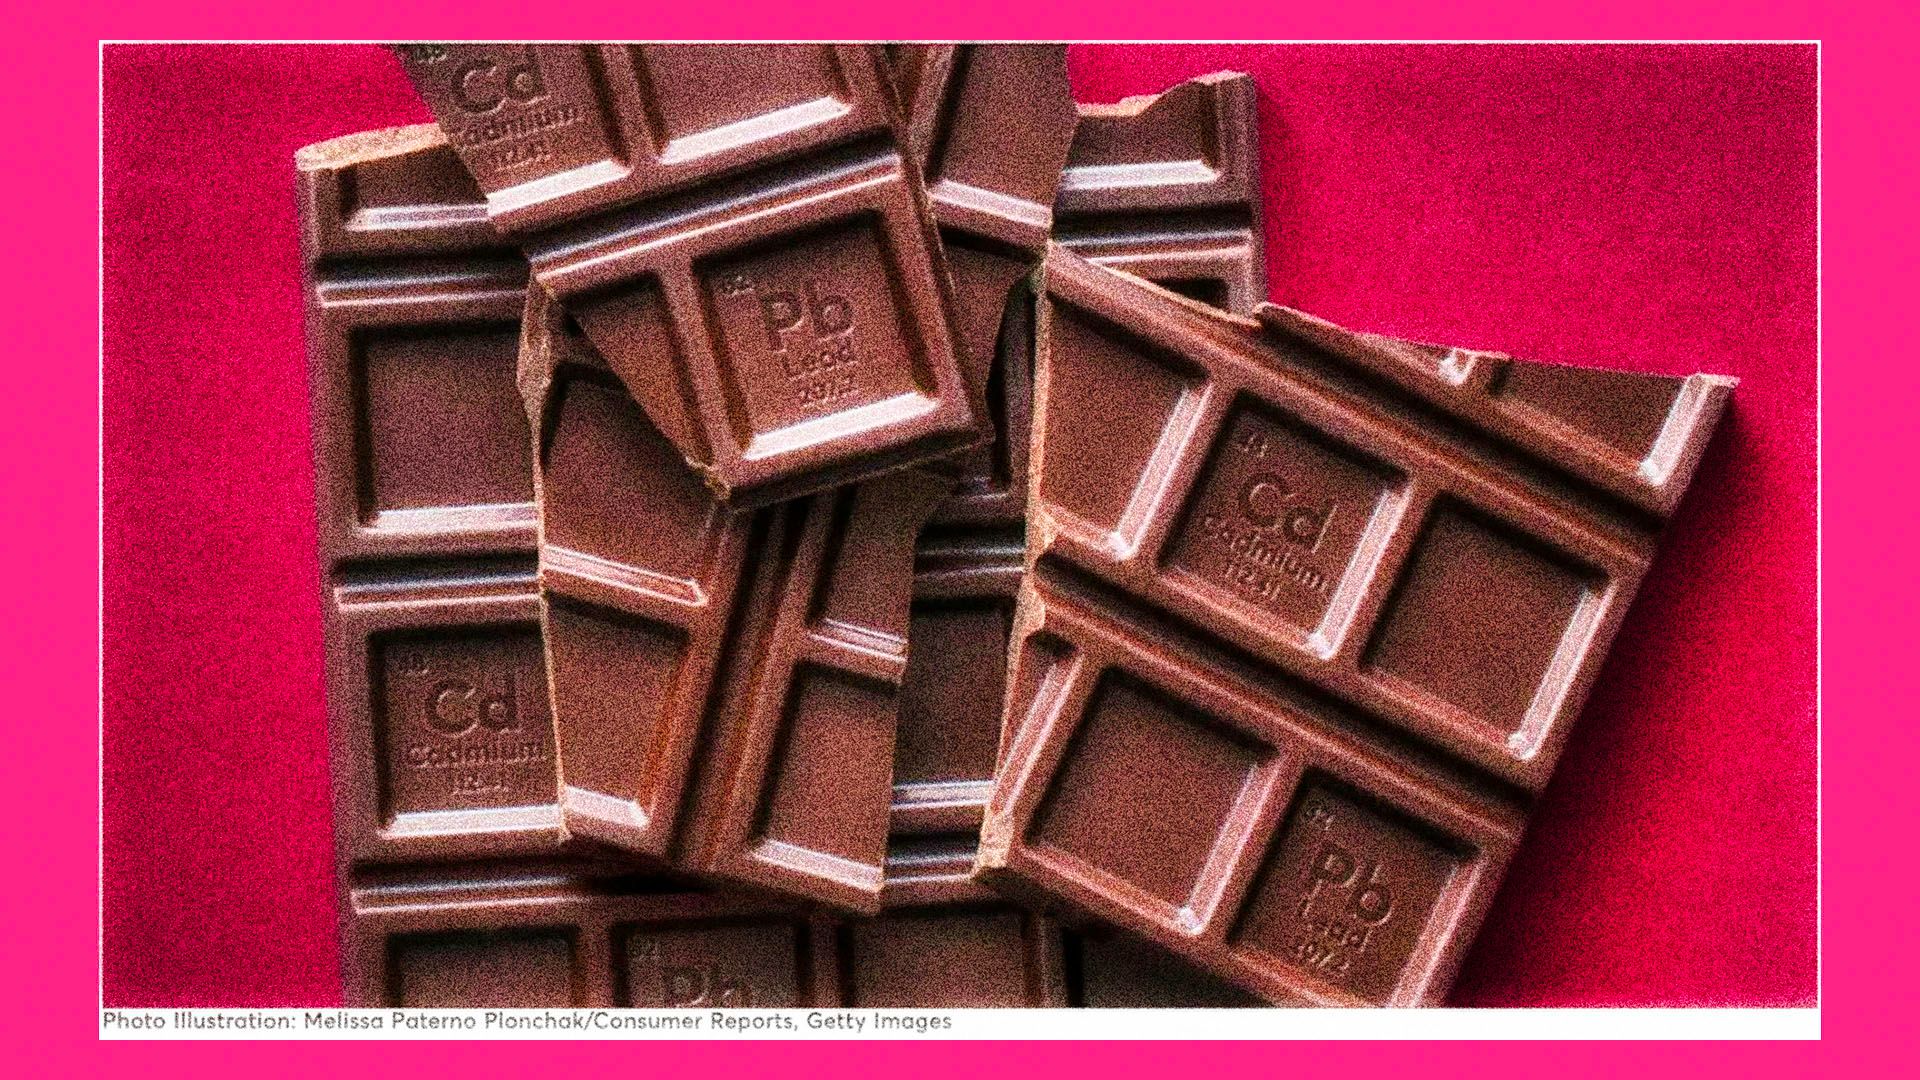 The Irresponsible Demonization of Cadmium in Chocolate